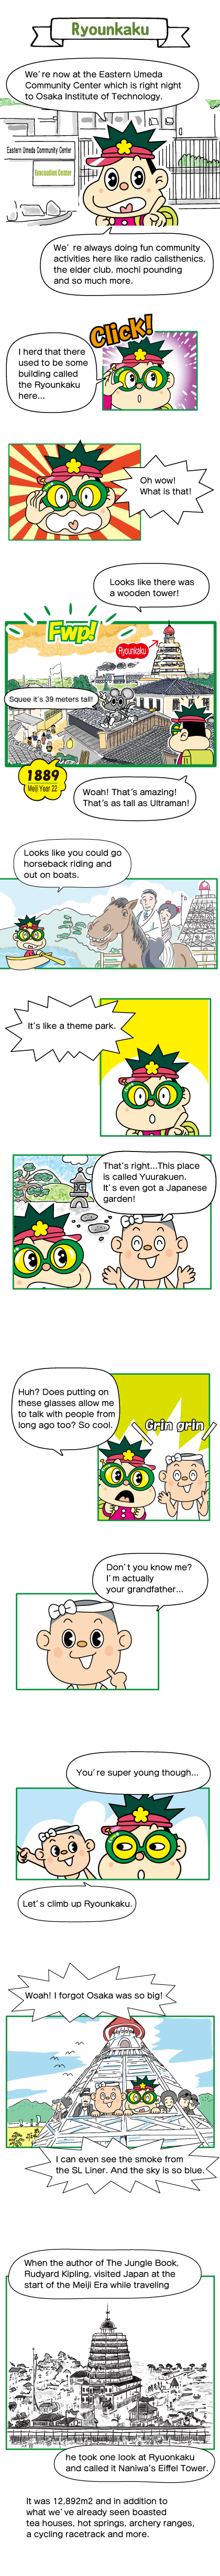 Cartoon on the history of The site of Ryounkaku 1